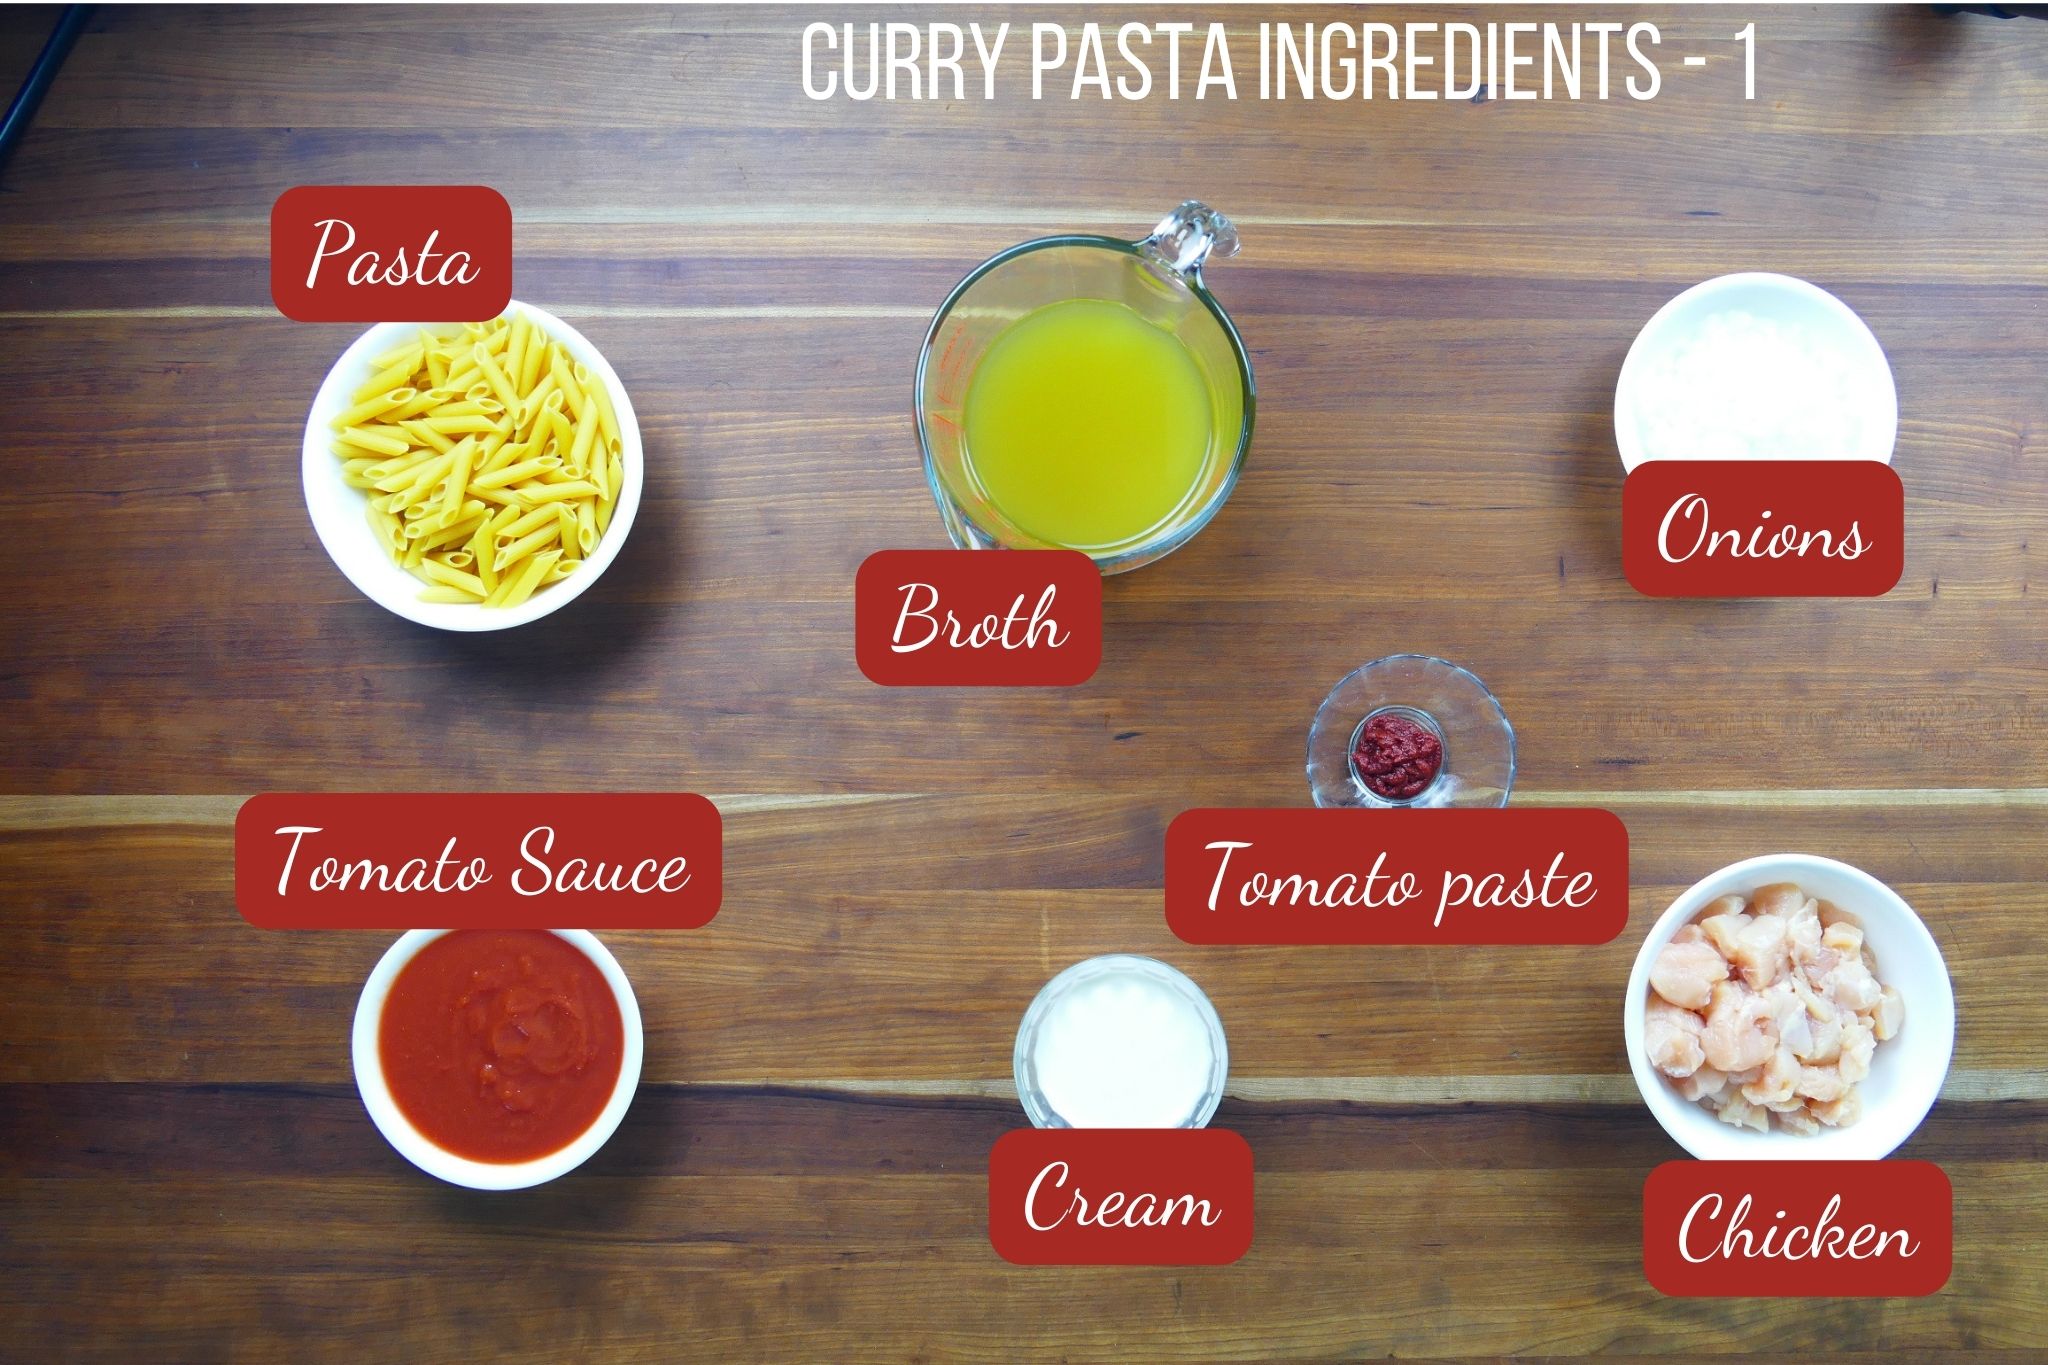 Curry pasta ingredients list part 1 - pasta, broth, onions, tomato sauce, cream, tomato paste, chicken